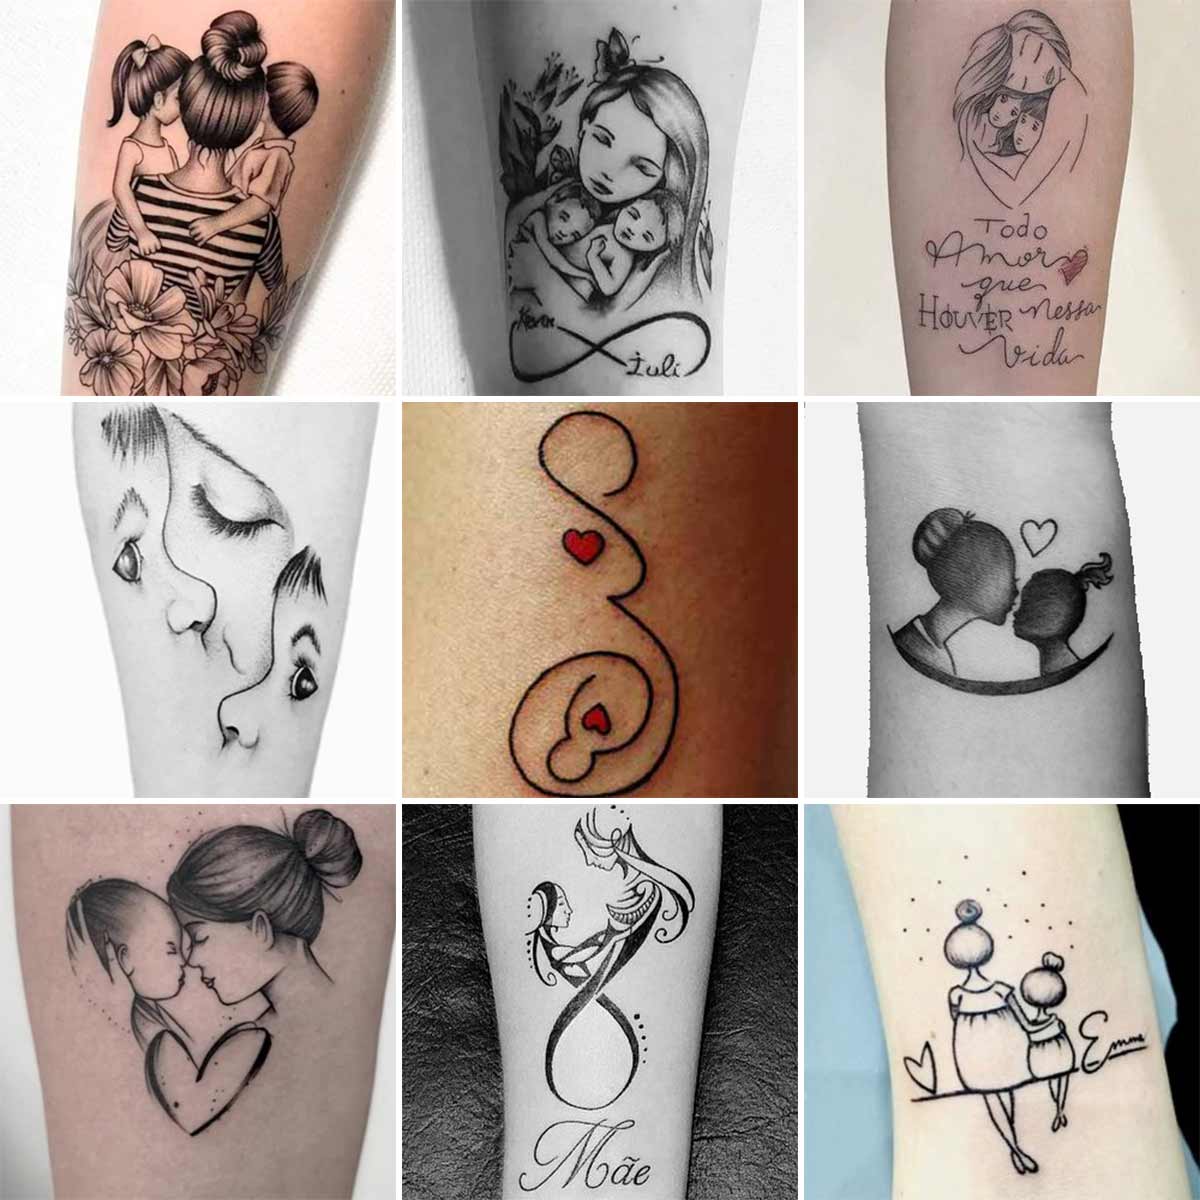 Tatuaggio Famiglia: 200 immagini e idee bellissime!